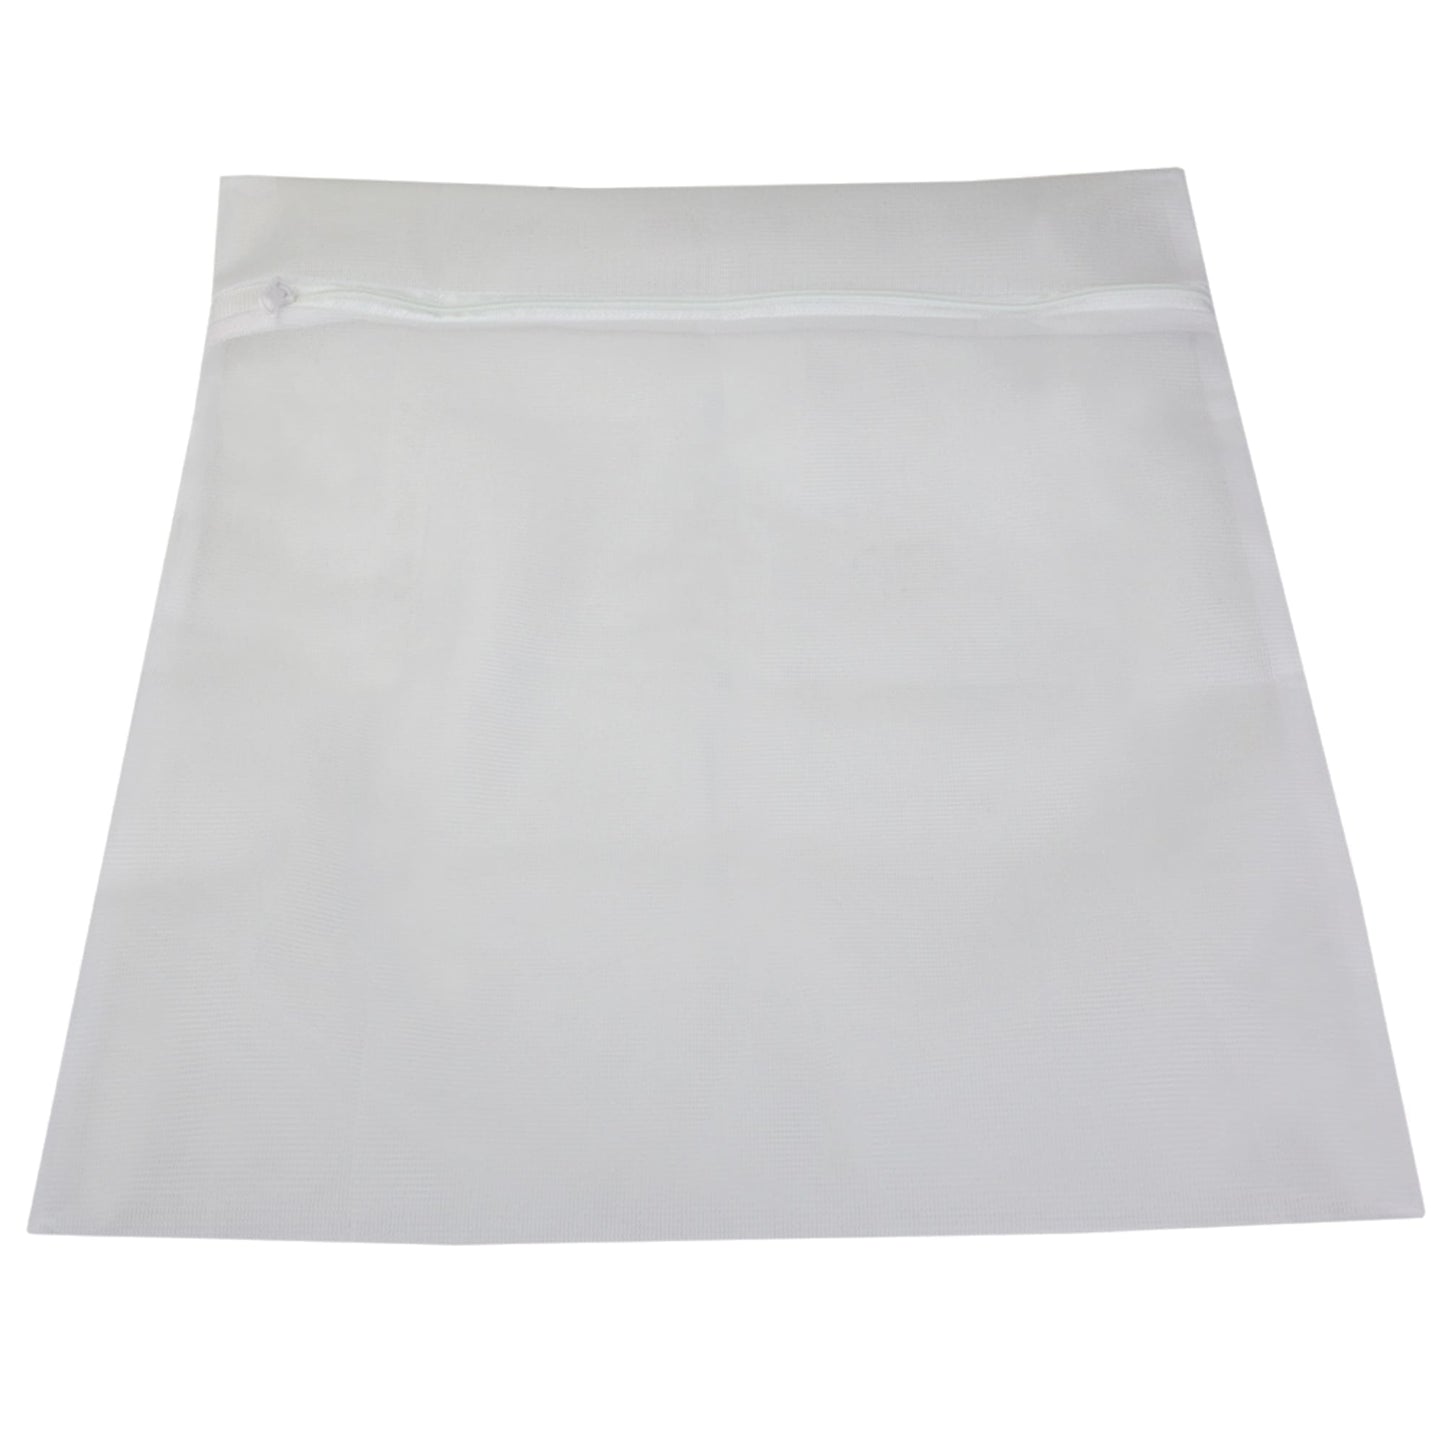 3 Piece Micro Mesh Wash Bag, White